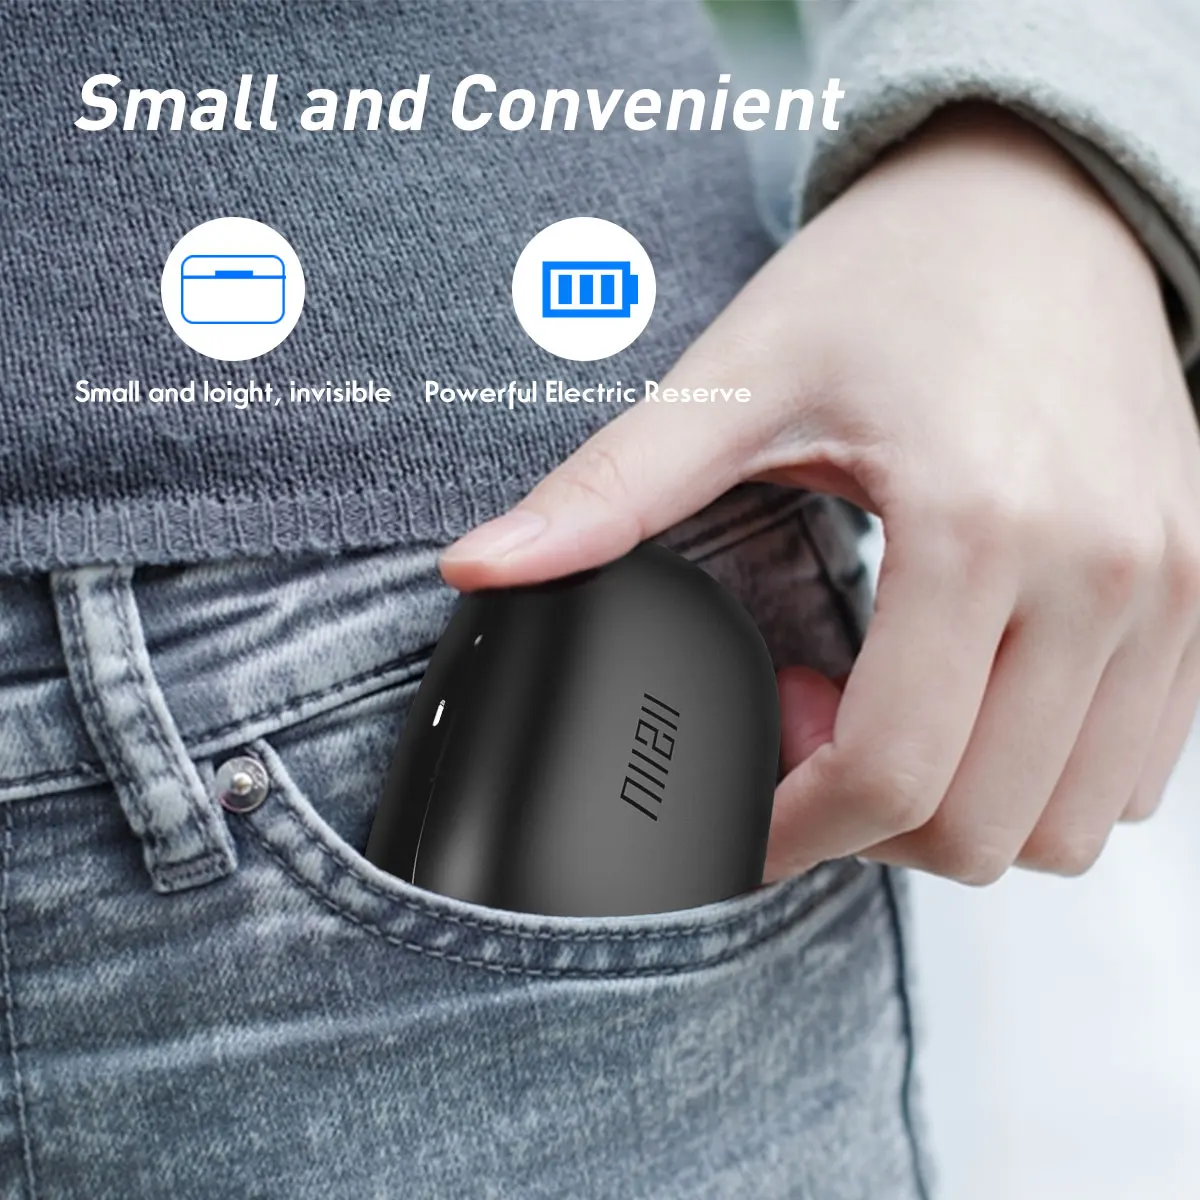 UiiSii TWS21  Wireless Earphone TWS Earbuds TWS Earbuds with Charging Case